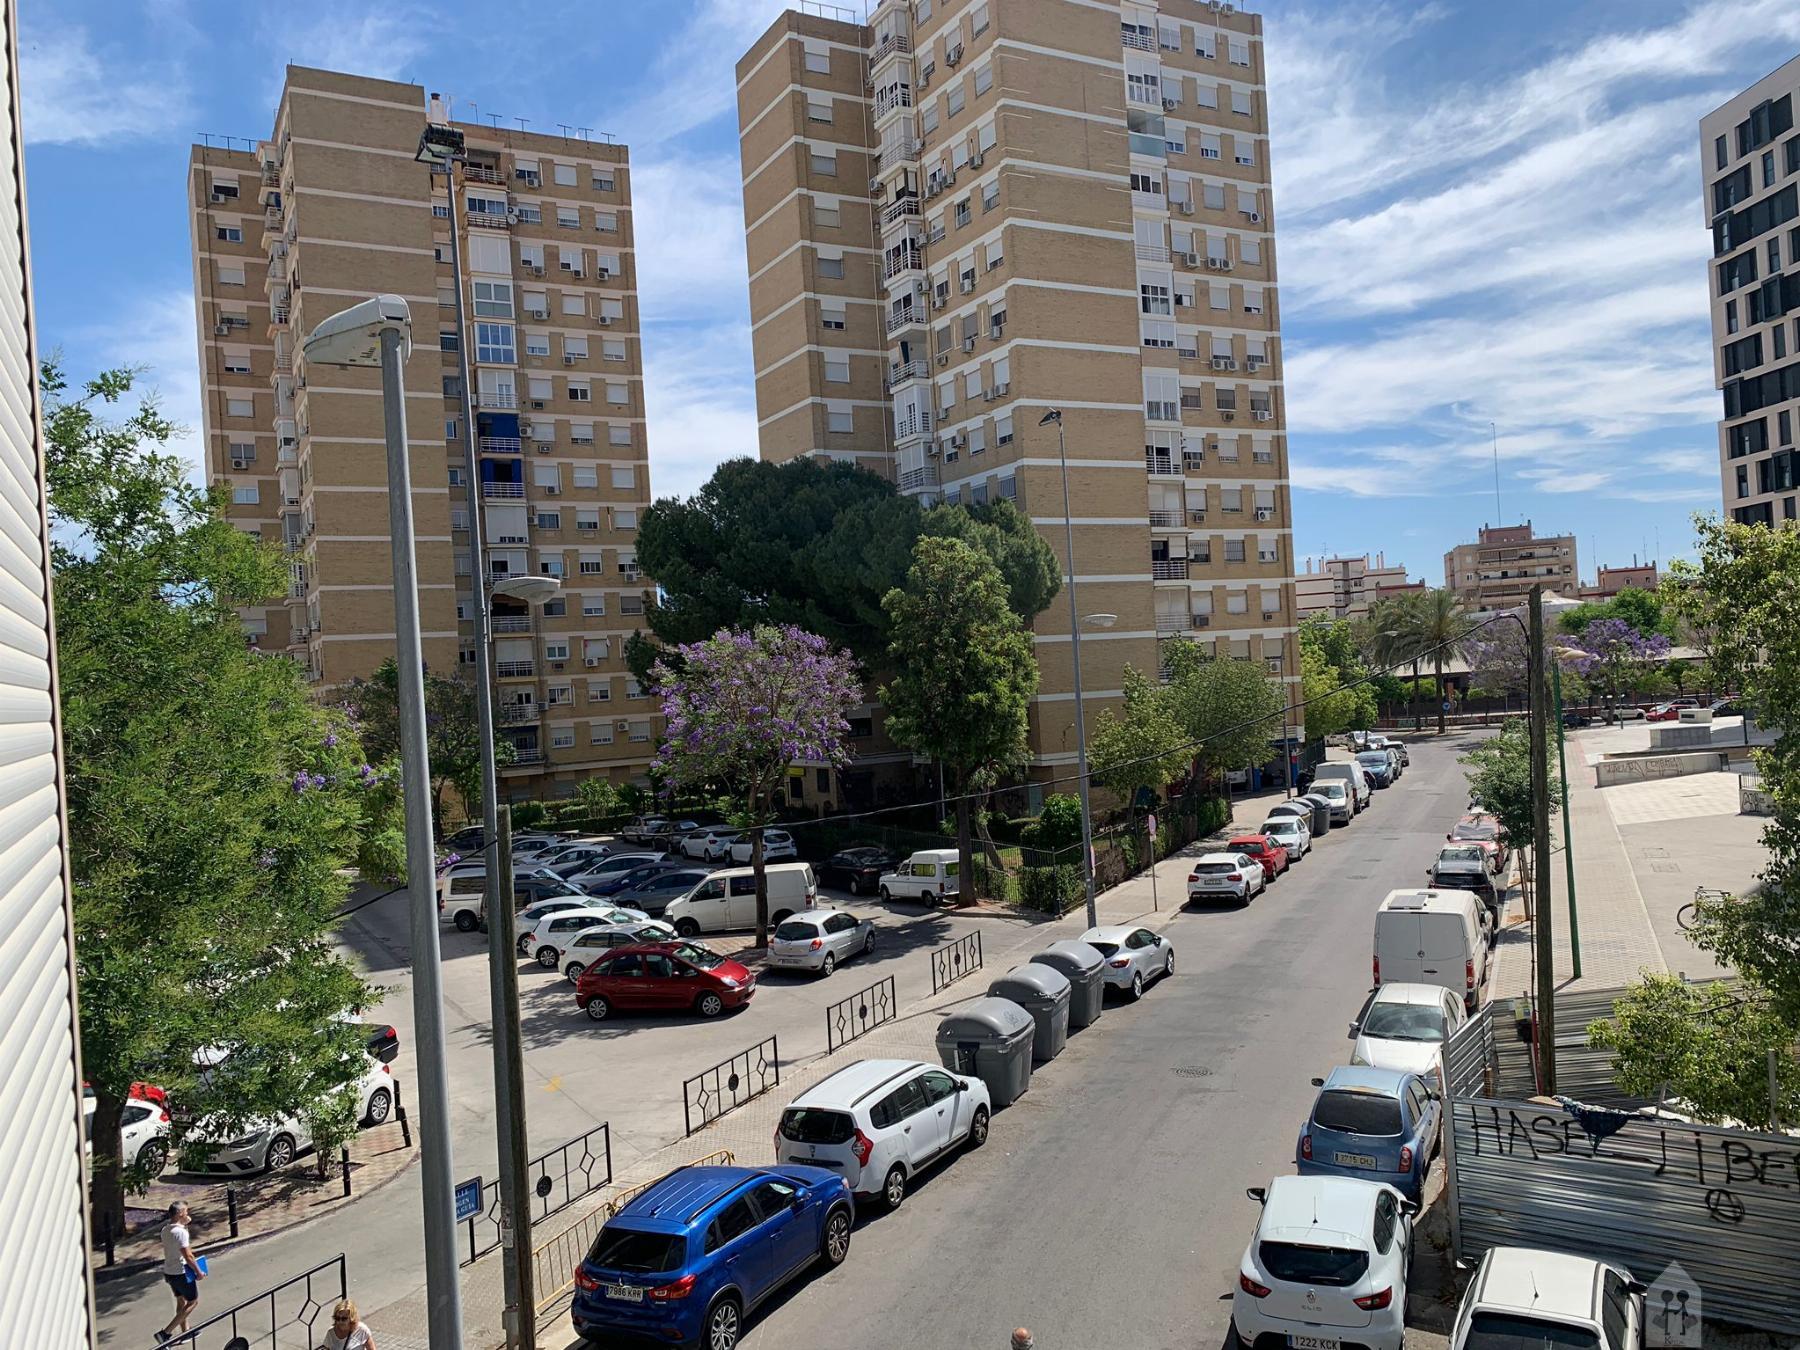 Alquiler de piso en Sevilla